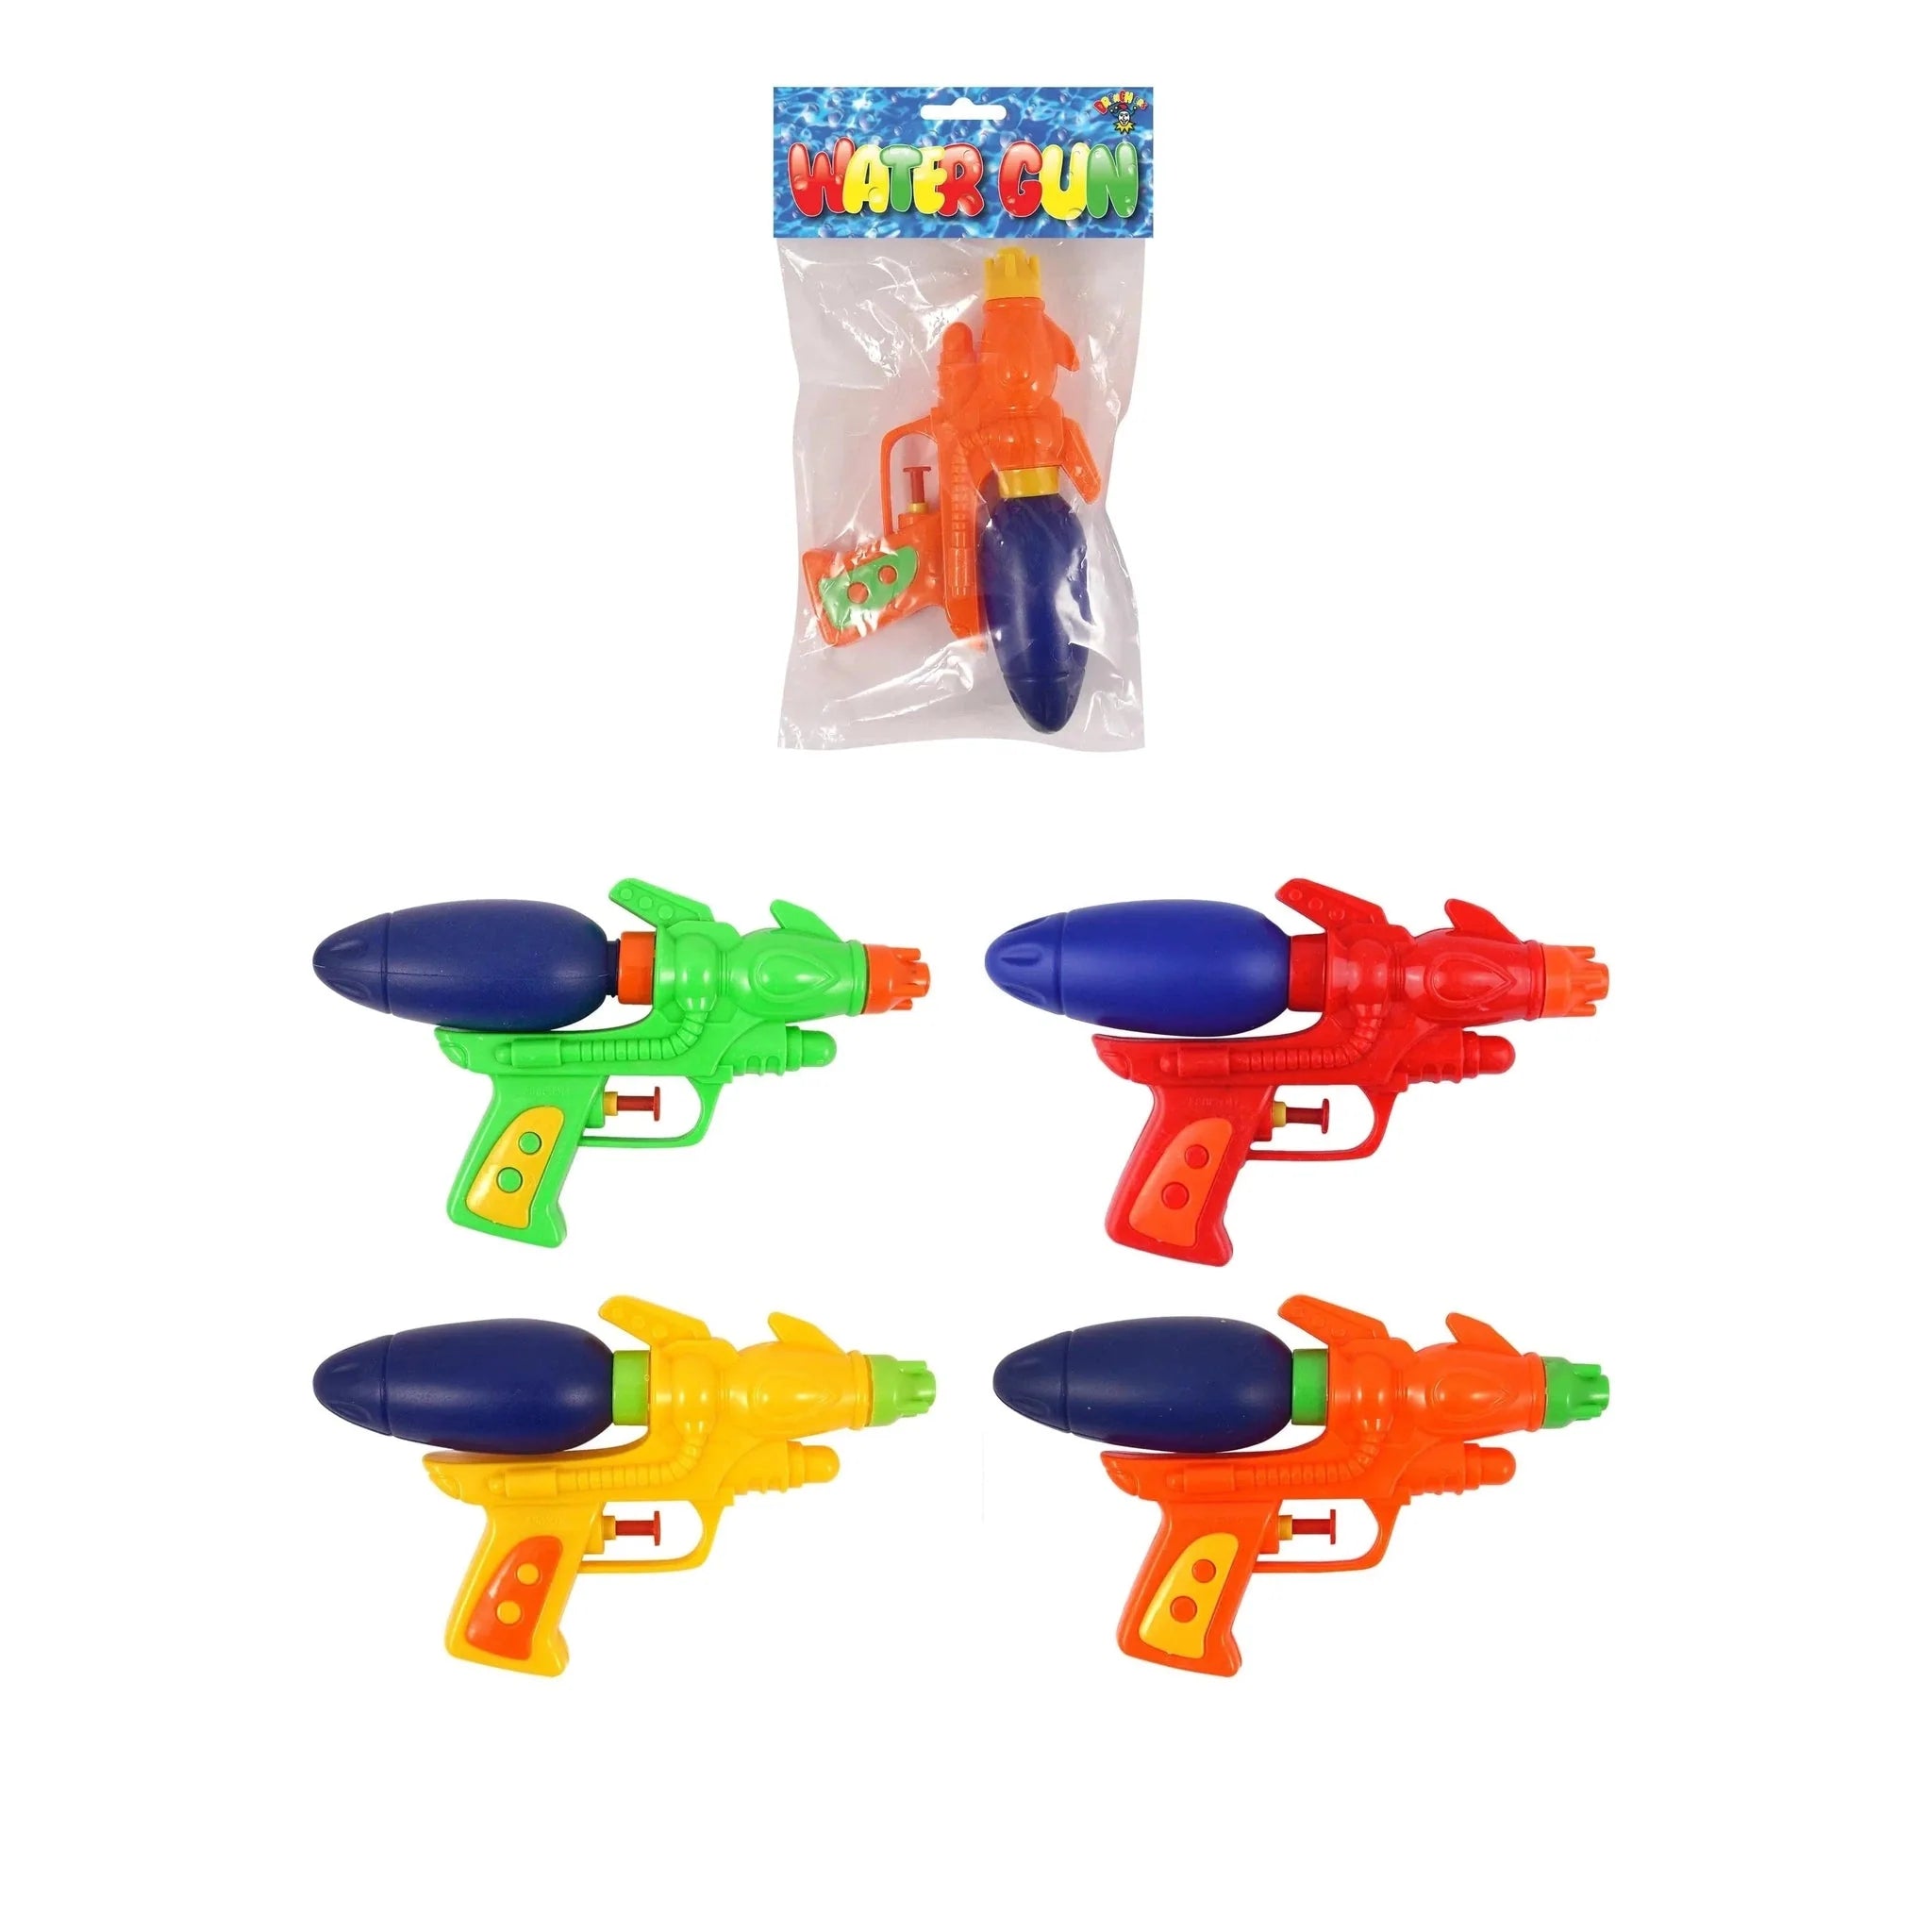 Water Pistol Gun - Kids Party Craft